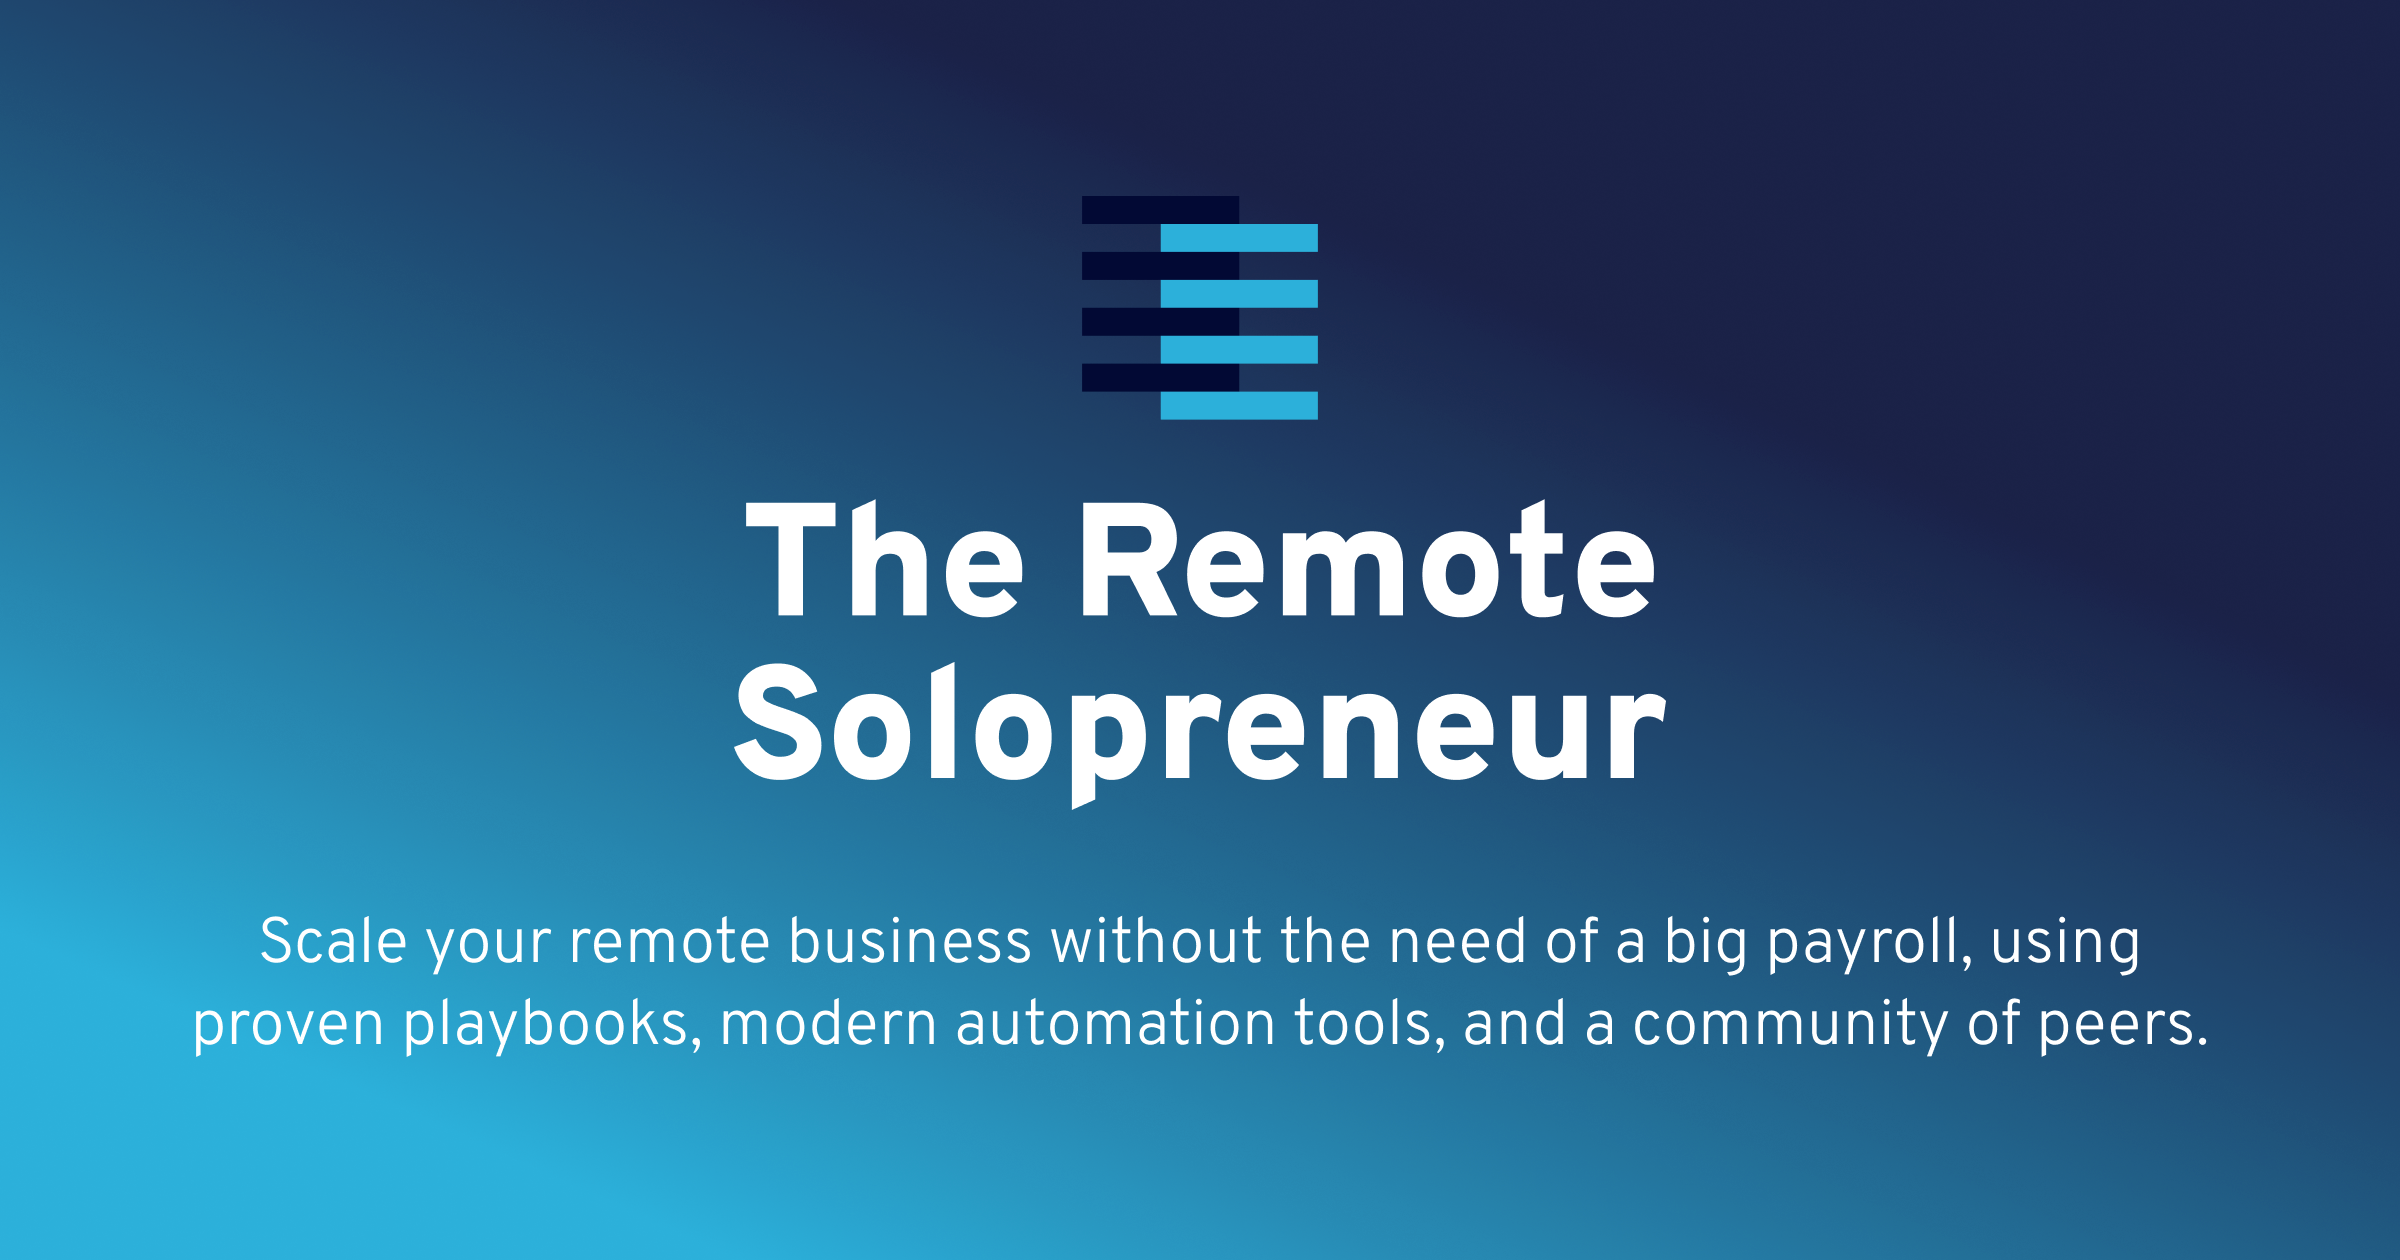 The Remote Solopreneur